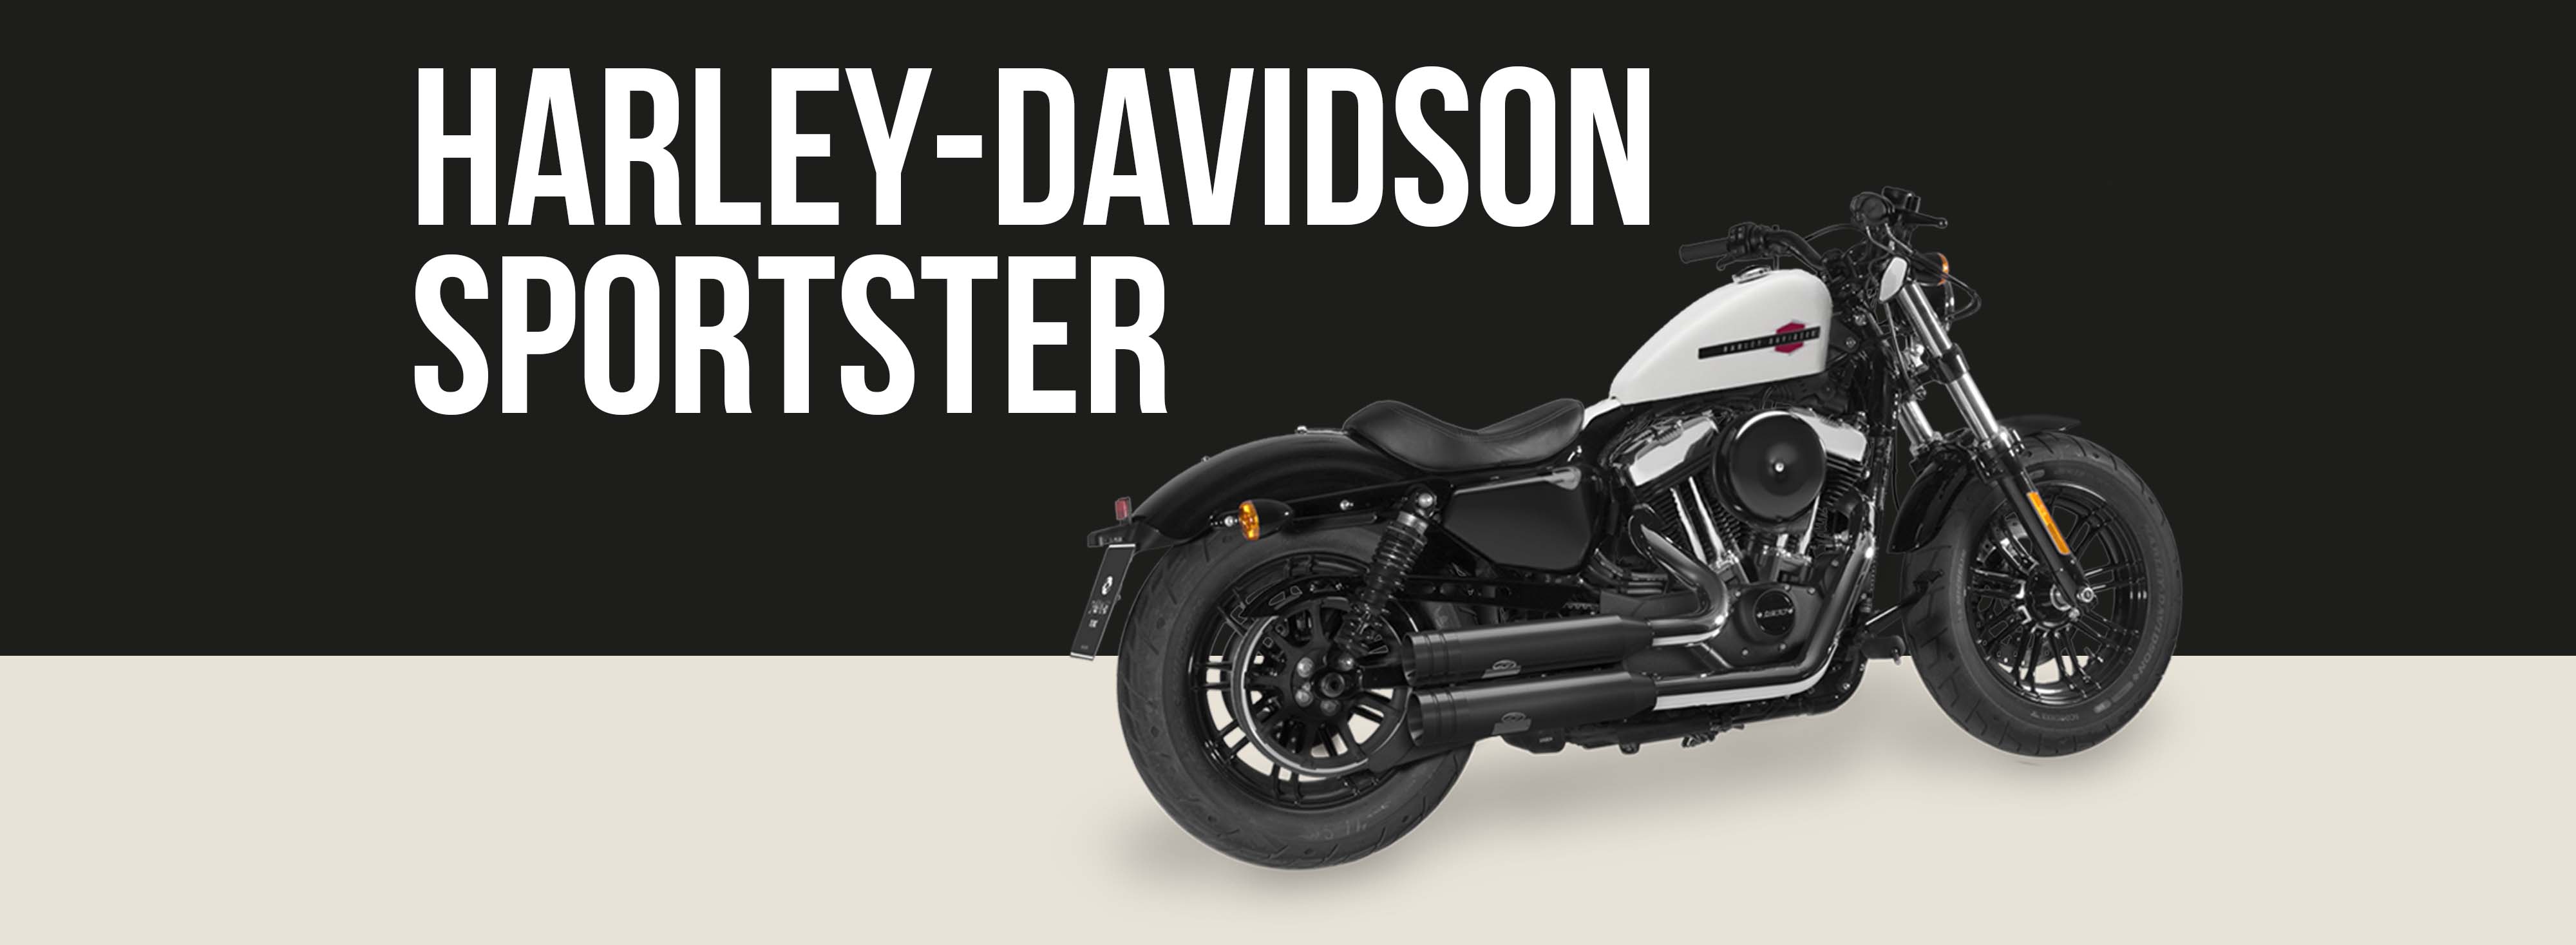 Harley-davidson Sportster Motorcycle Brand Page Header